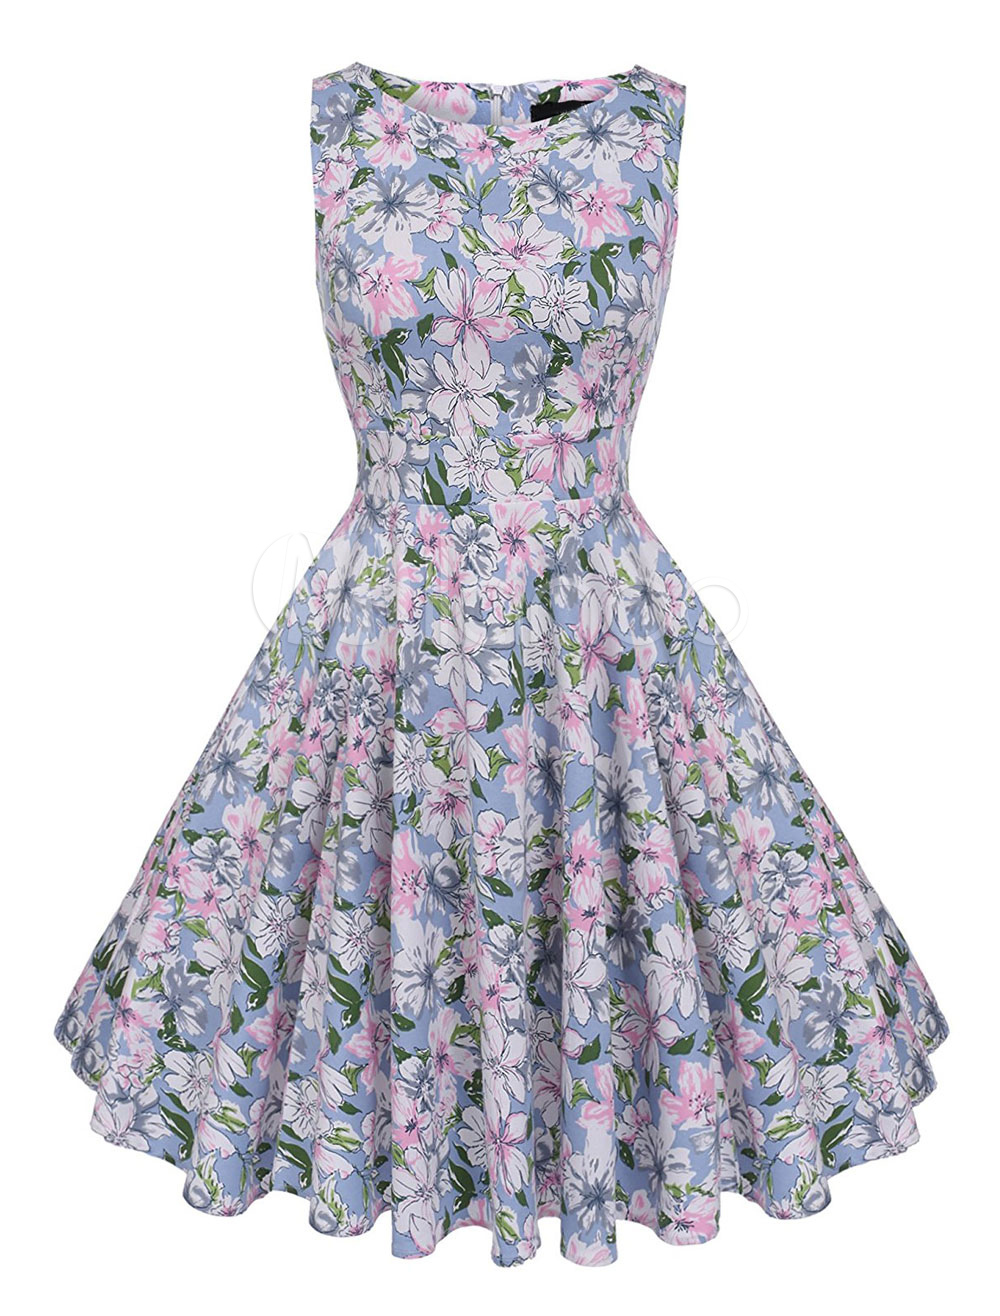 Floral Vintage Dress 1950s Swing Dress Sleeveless Jewel Neck Blue ...